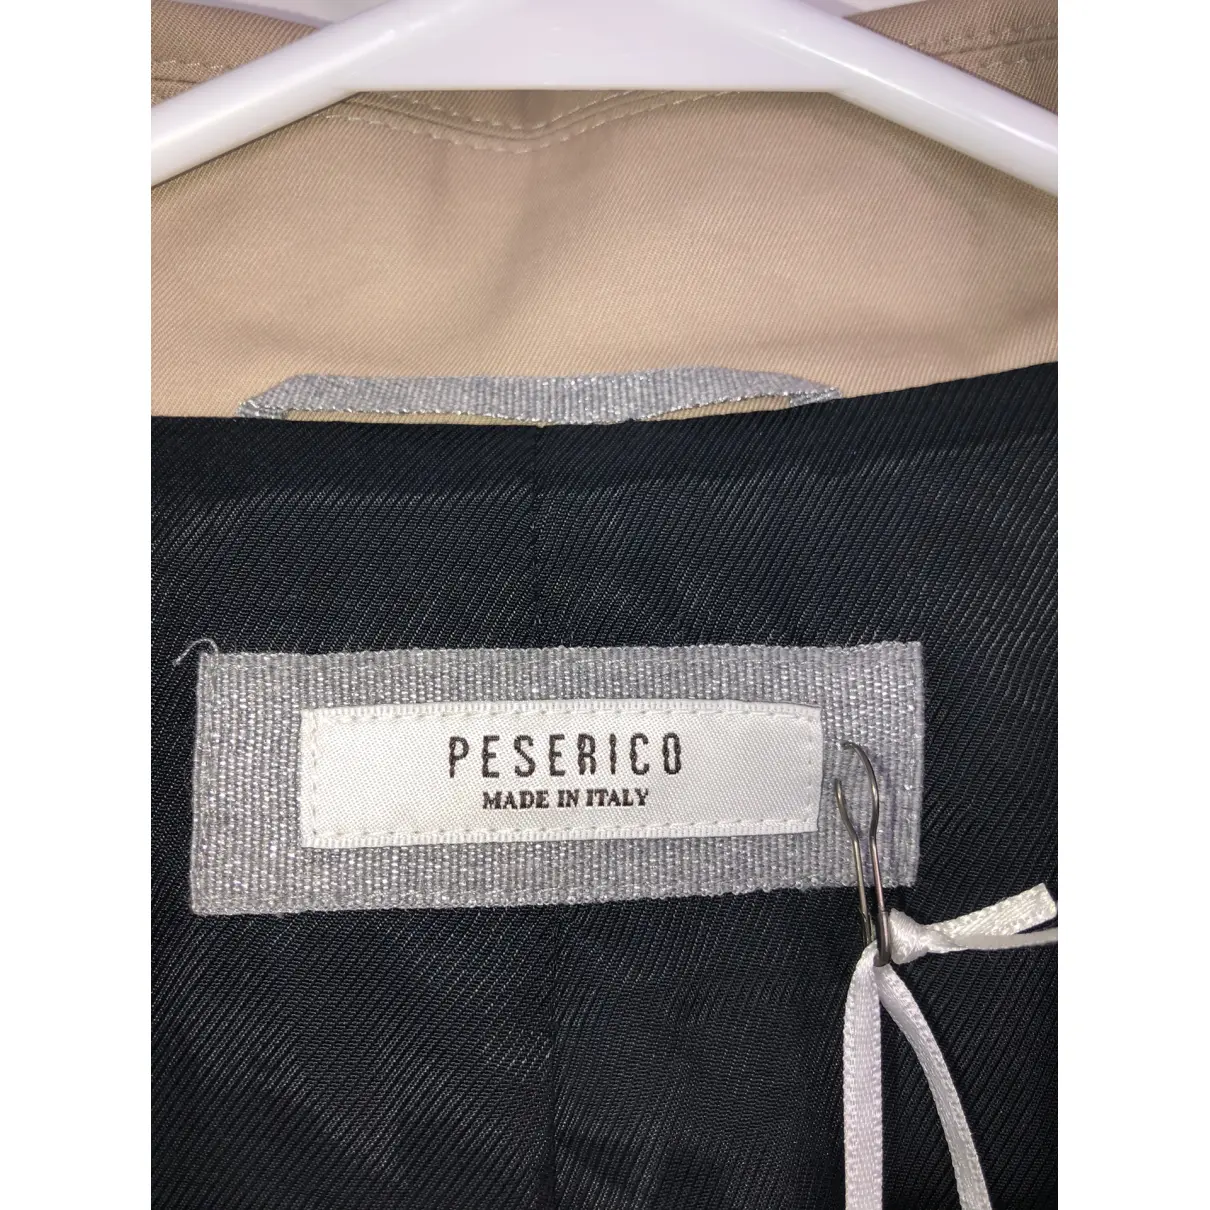 Buy Peserico Trench coat online